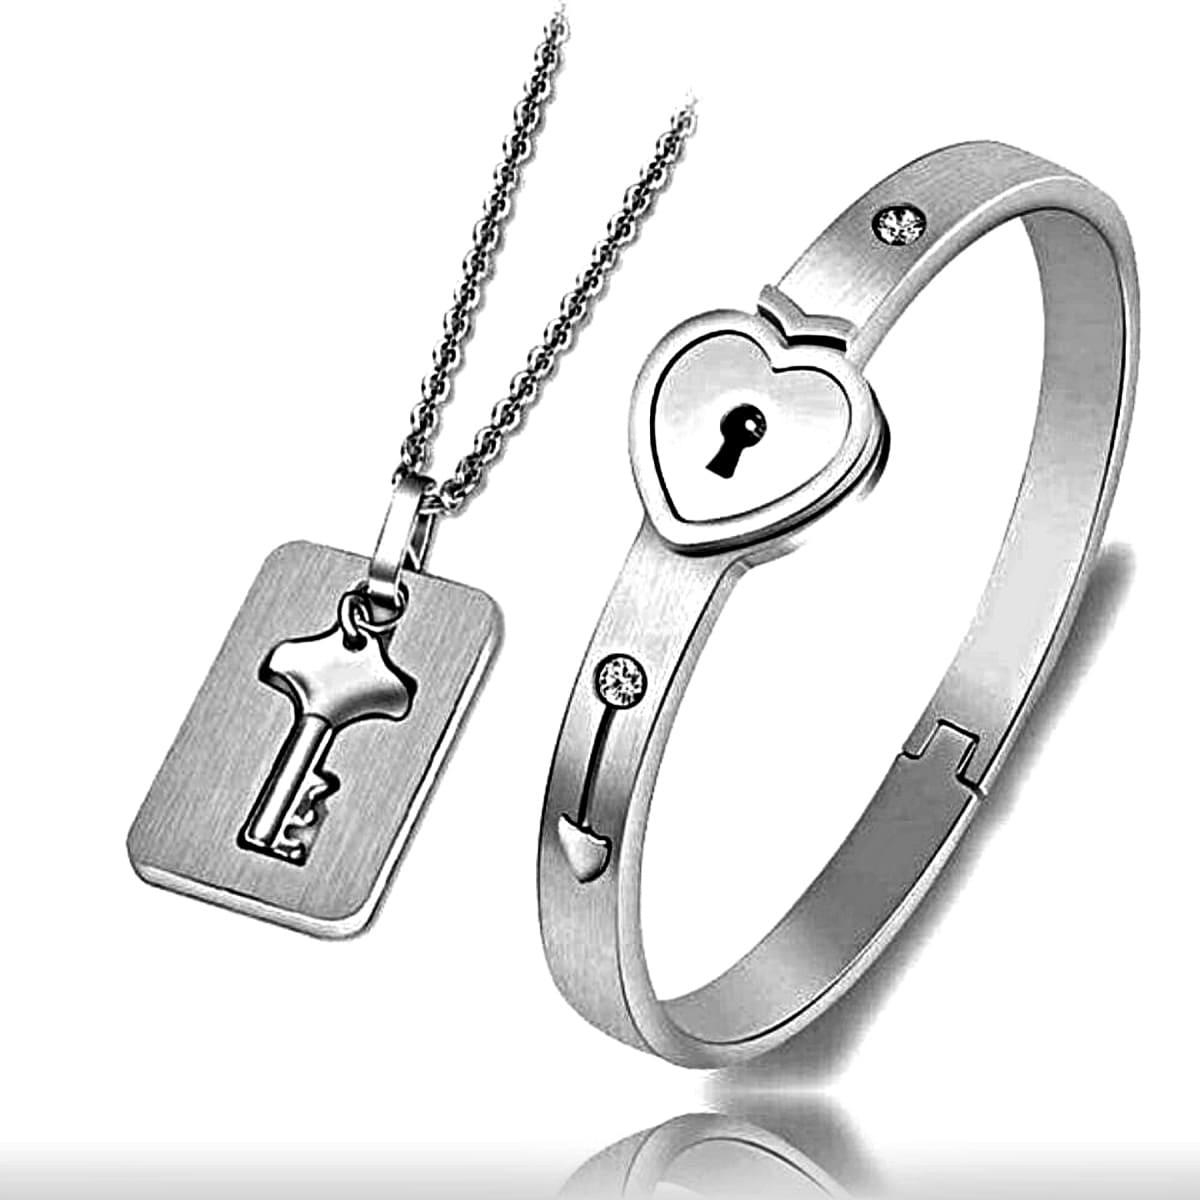 Lock and Key Bracelets for Couple, Set of 2